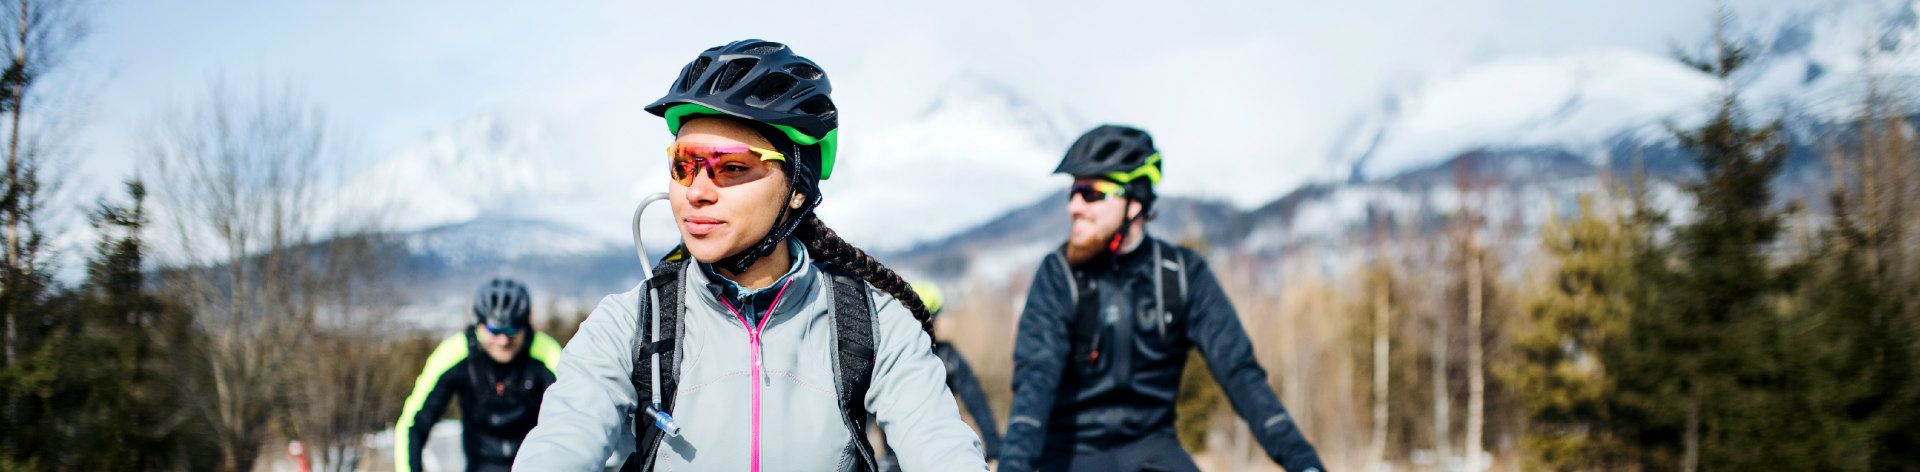 online cycling jackets women